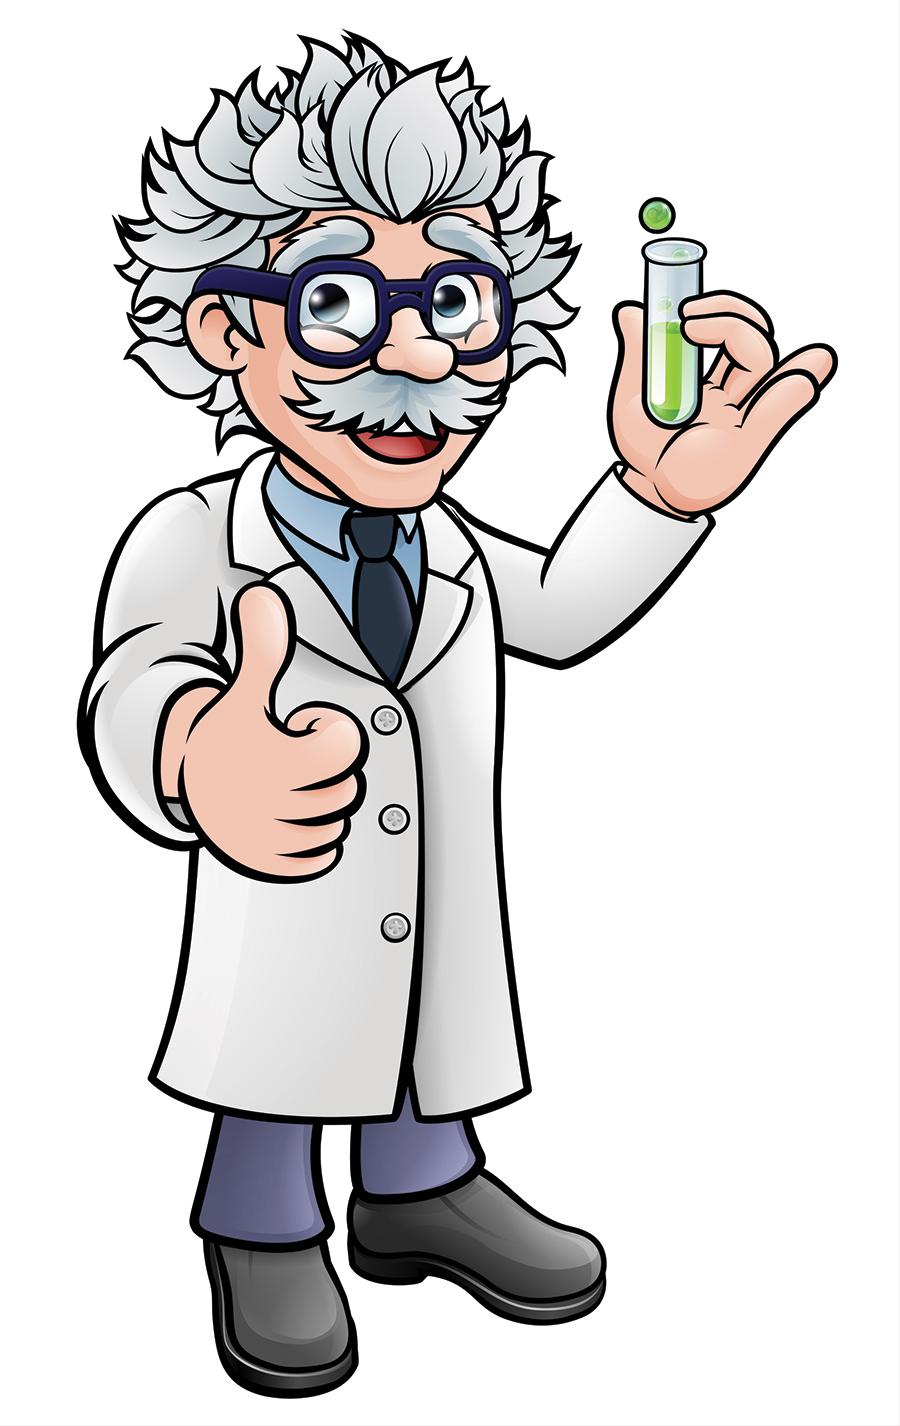 Cartoon Einstein holdimg a vile in a lab coat